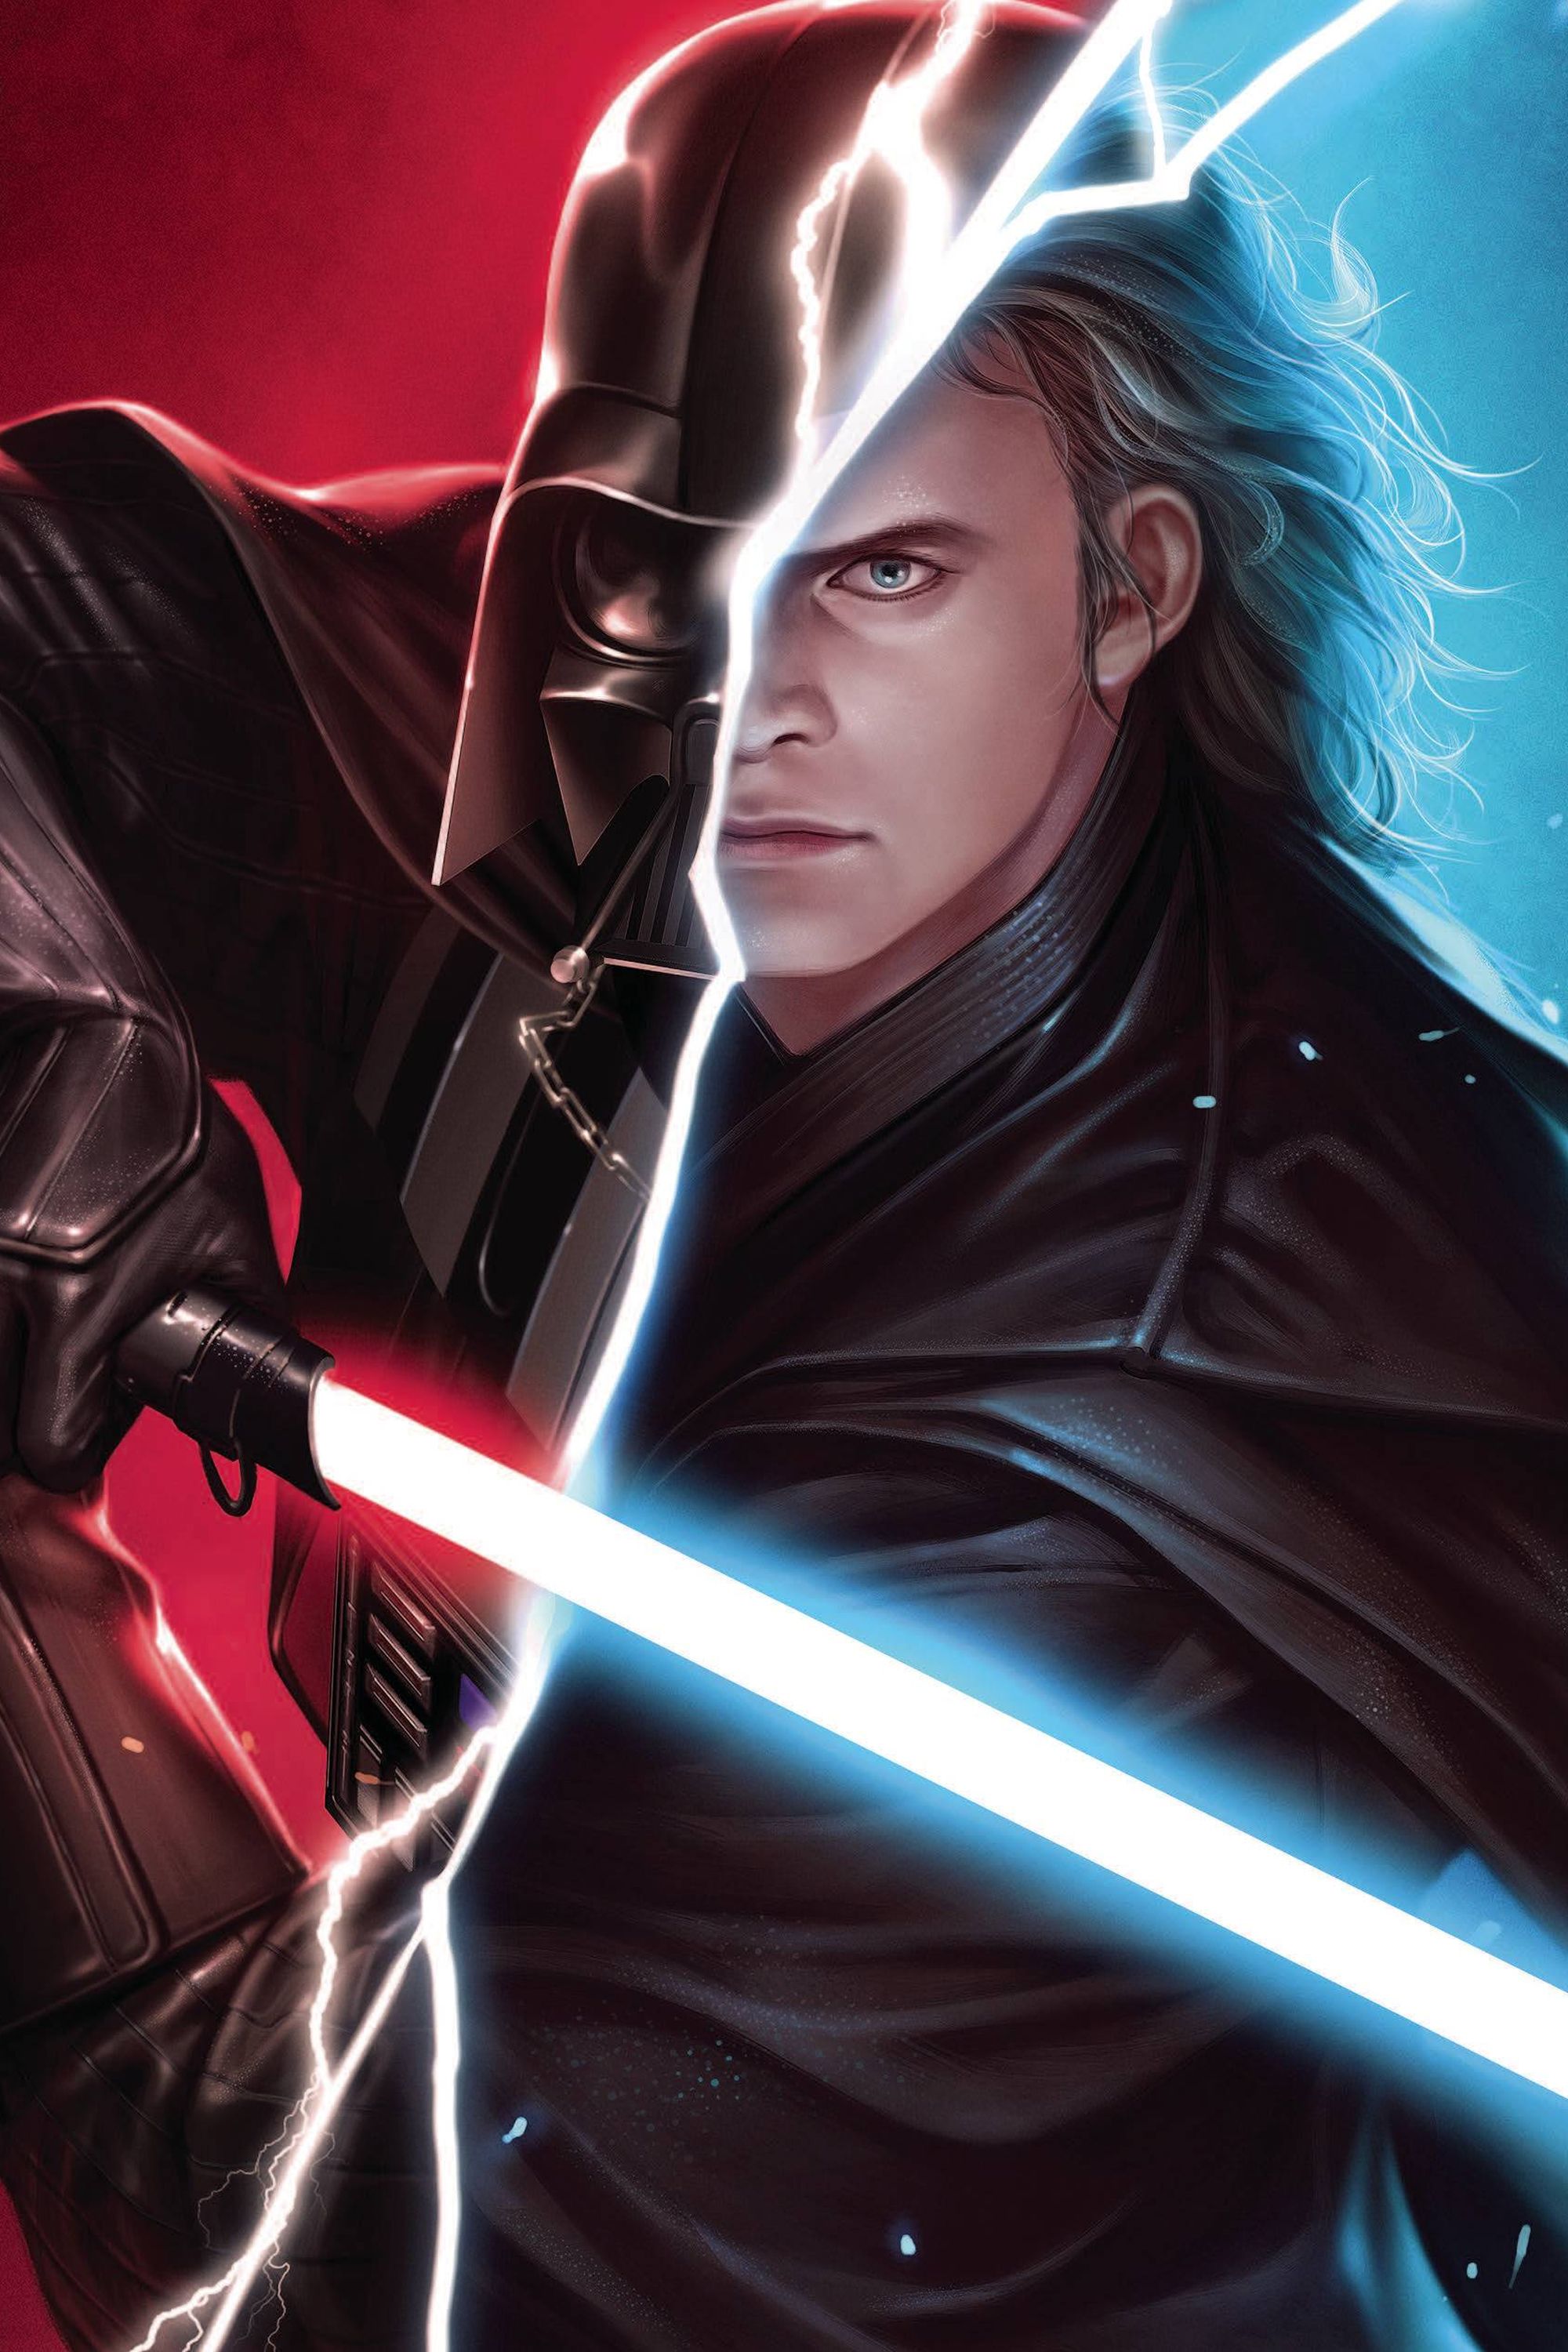 Darth Vader Protected Obi-Wan Kenobi's Lightsaber from Being Destroyed ...